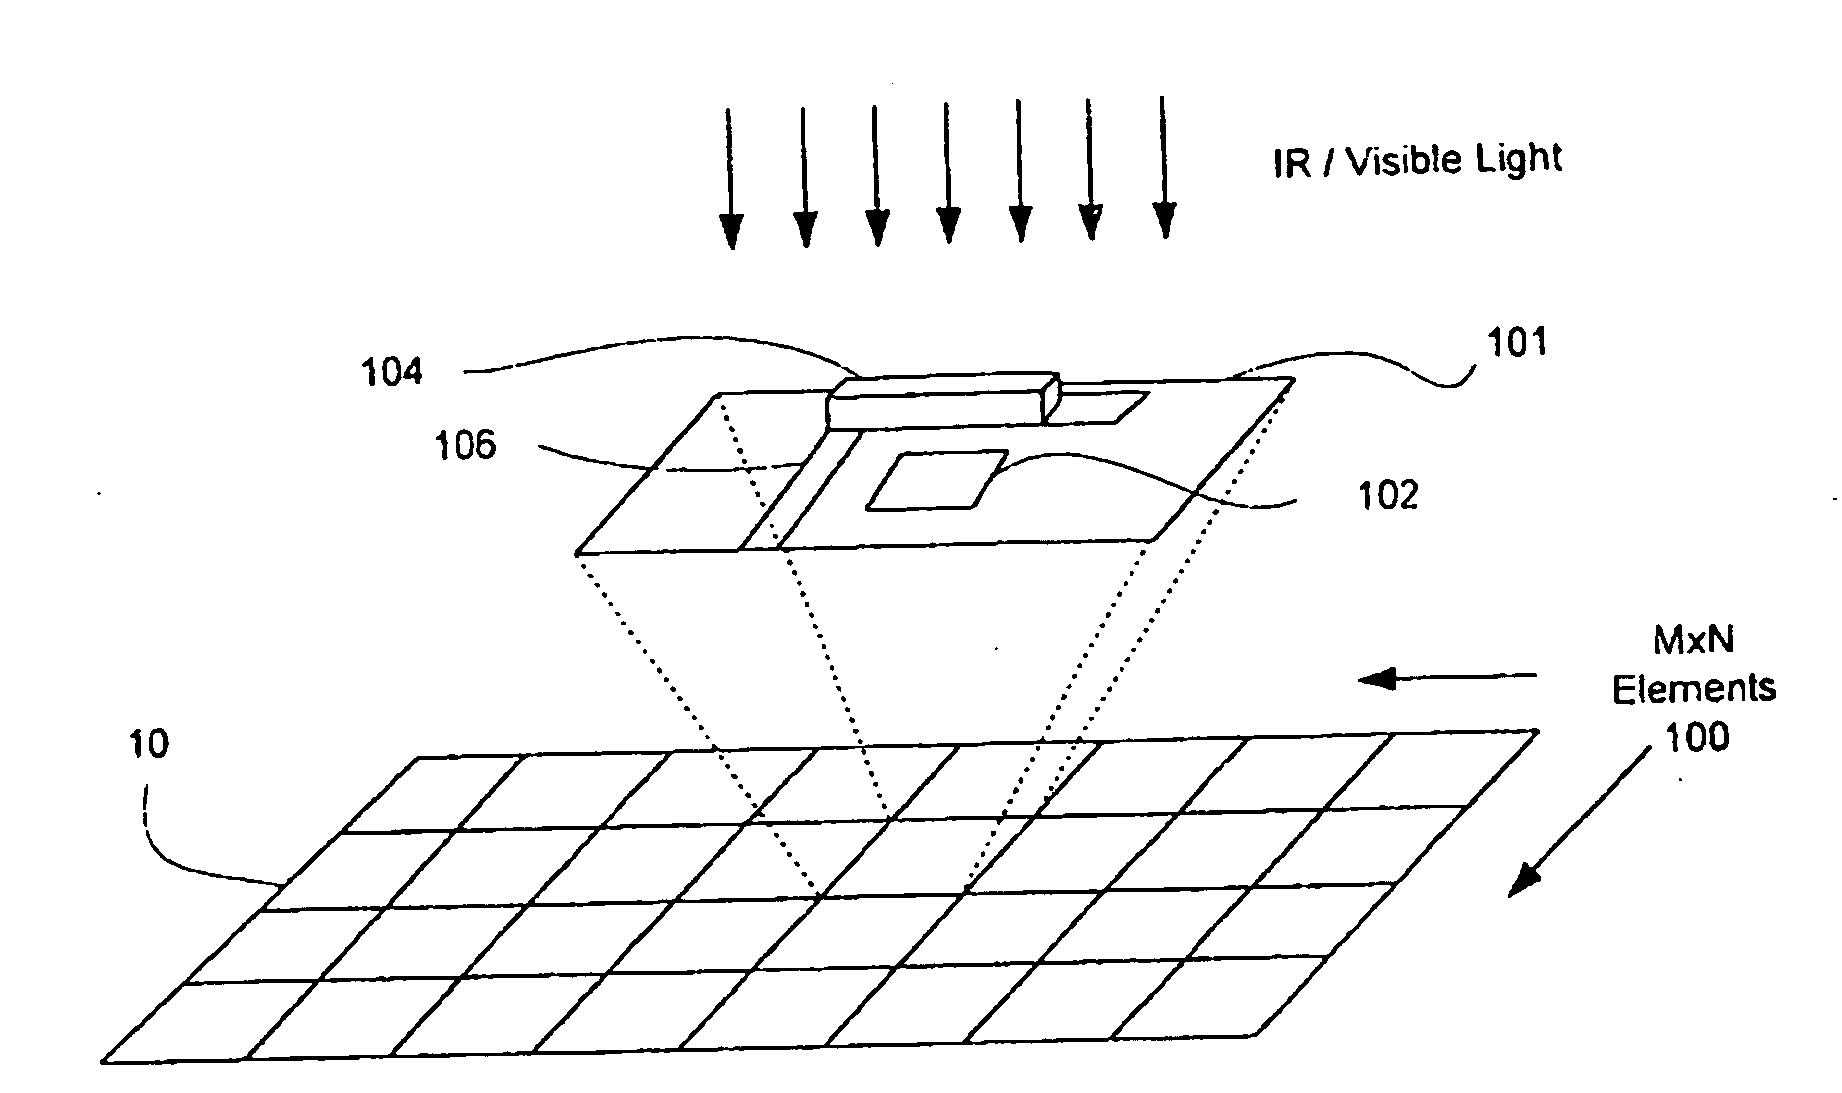 Multi-band focal plane array